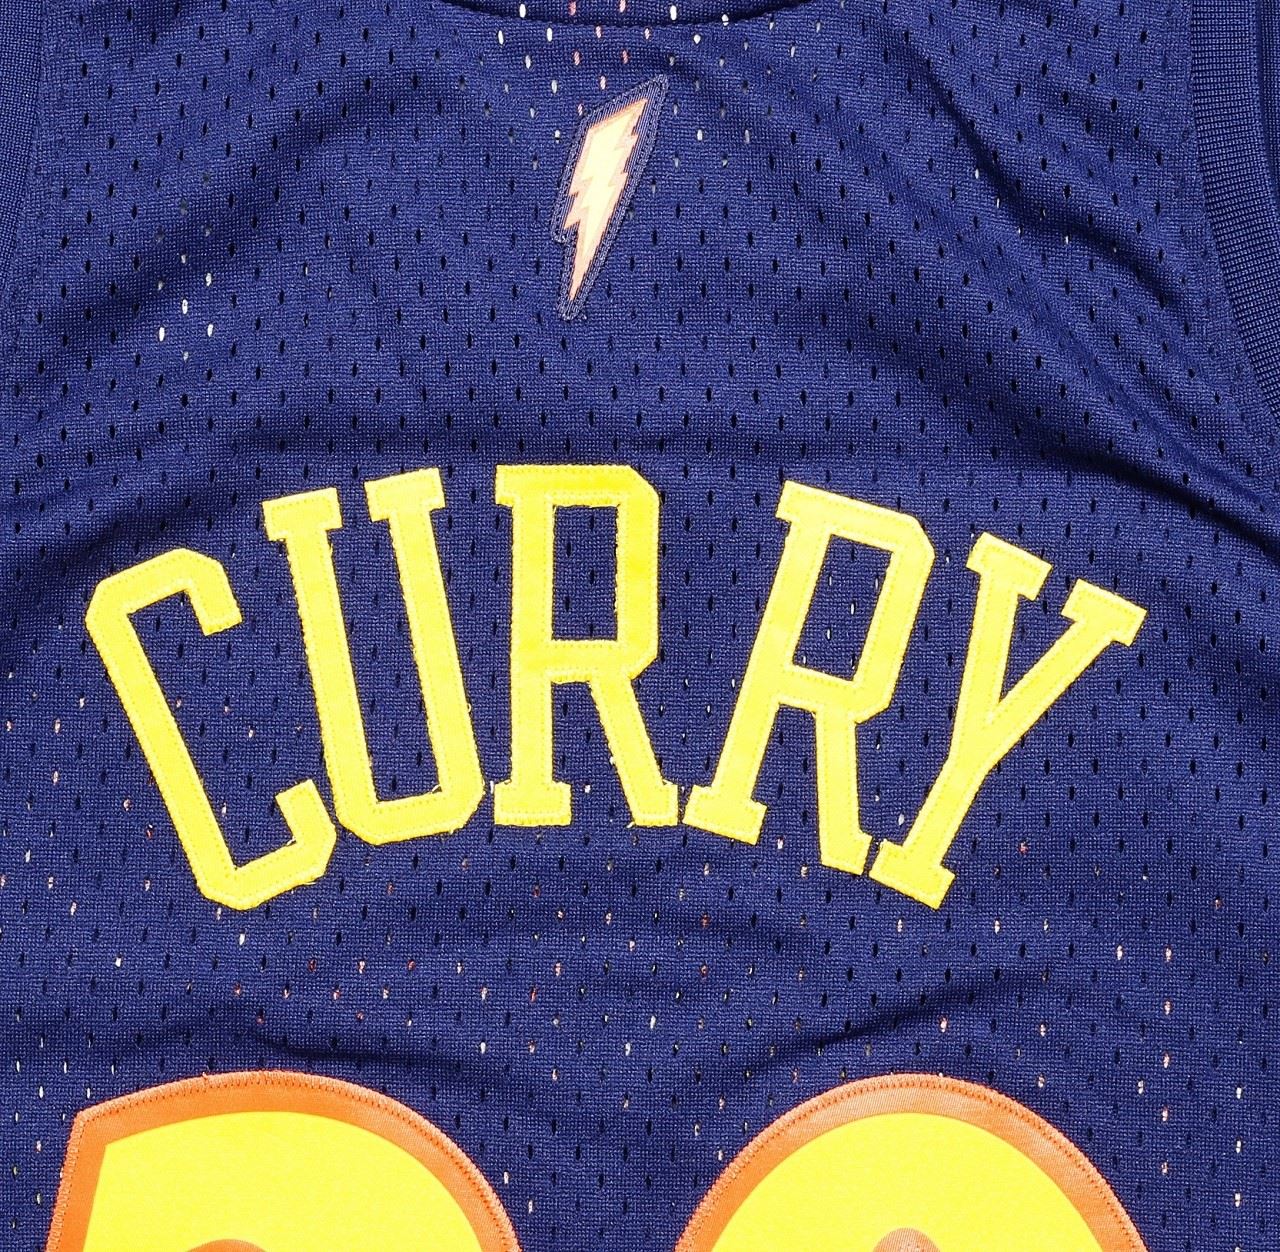 Stephen Curry #30 Golden State Warriors NBA Swingman Mitchell & Ness